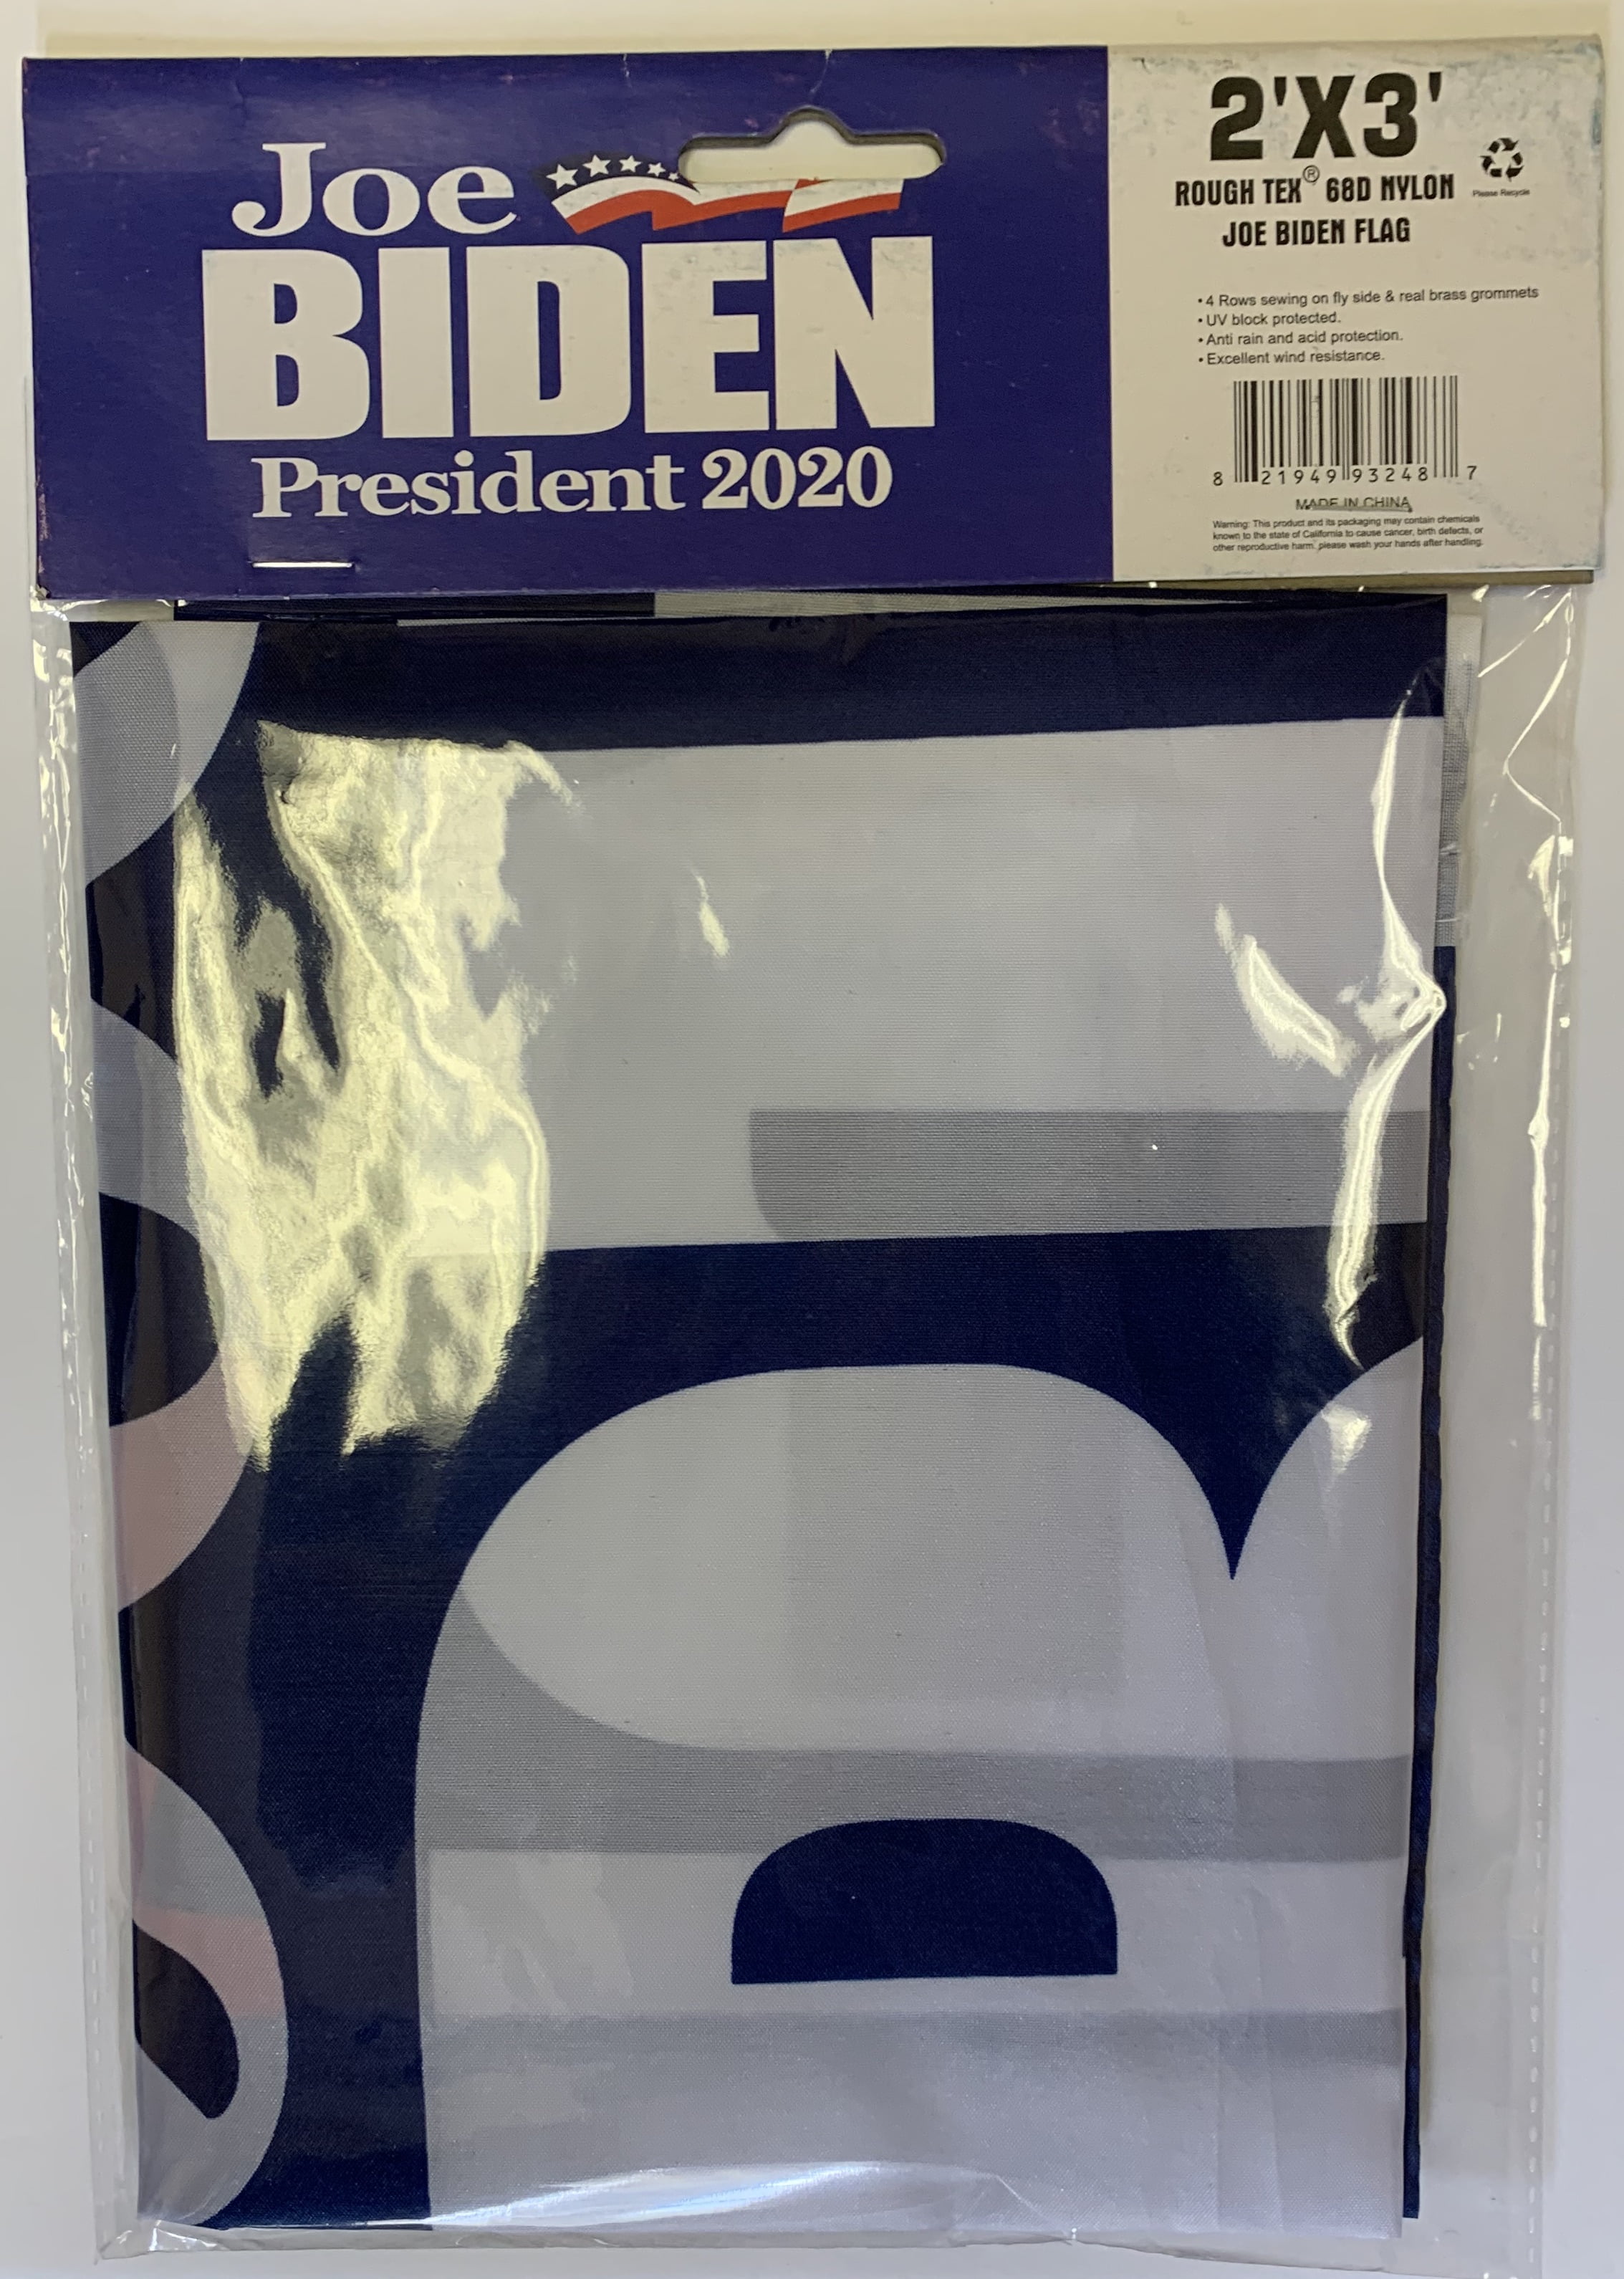 Details about   Joe Biden President 2020 Blue Premium Rough Tex Nylon 2x3 2'x3' Flag Banner 